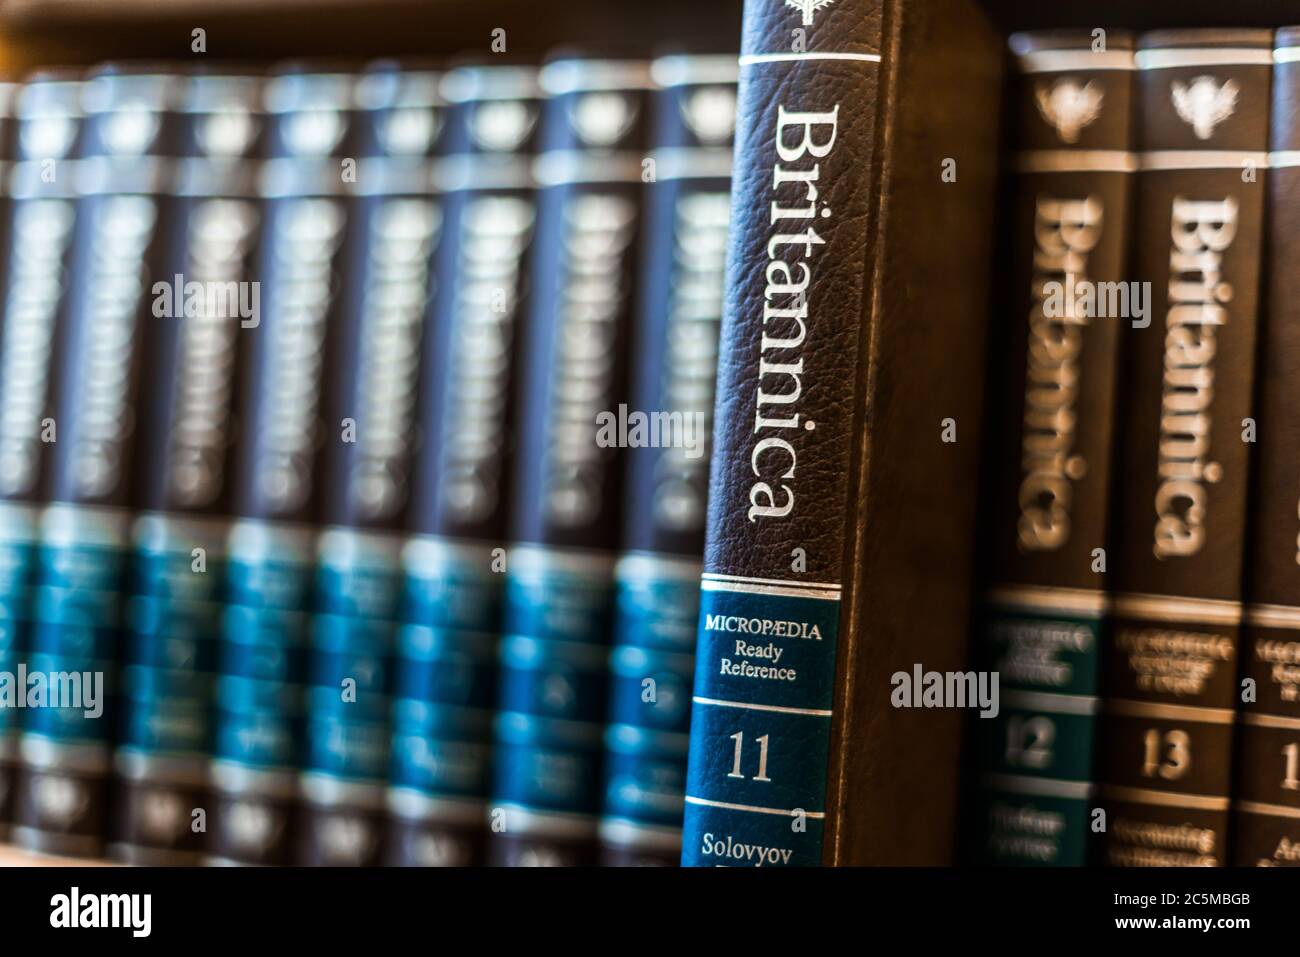 POZNAN, POL - FEB 03, 2020: Encyclopedia Britannica volumes on a shelf in a public library Stock Photo